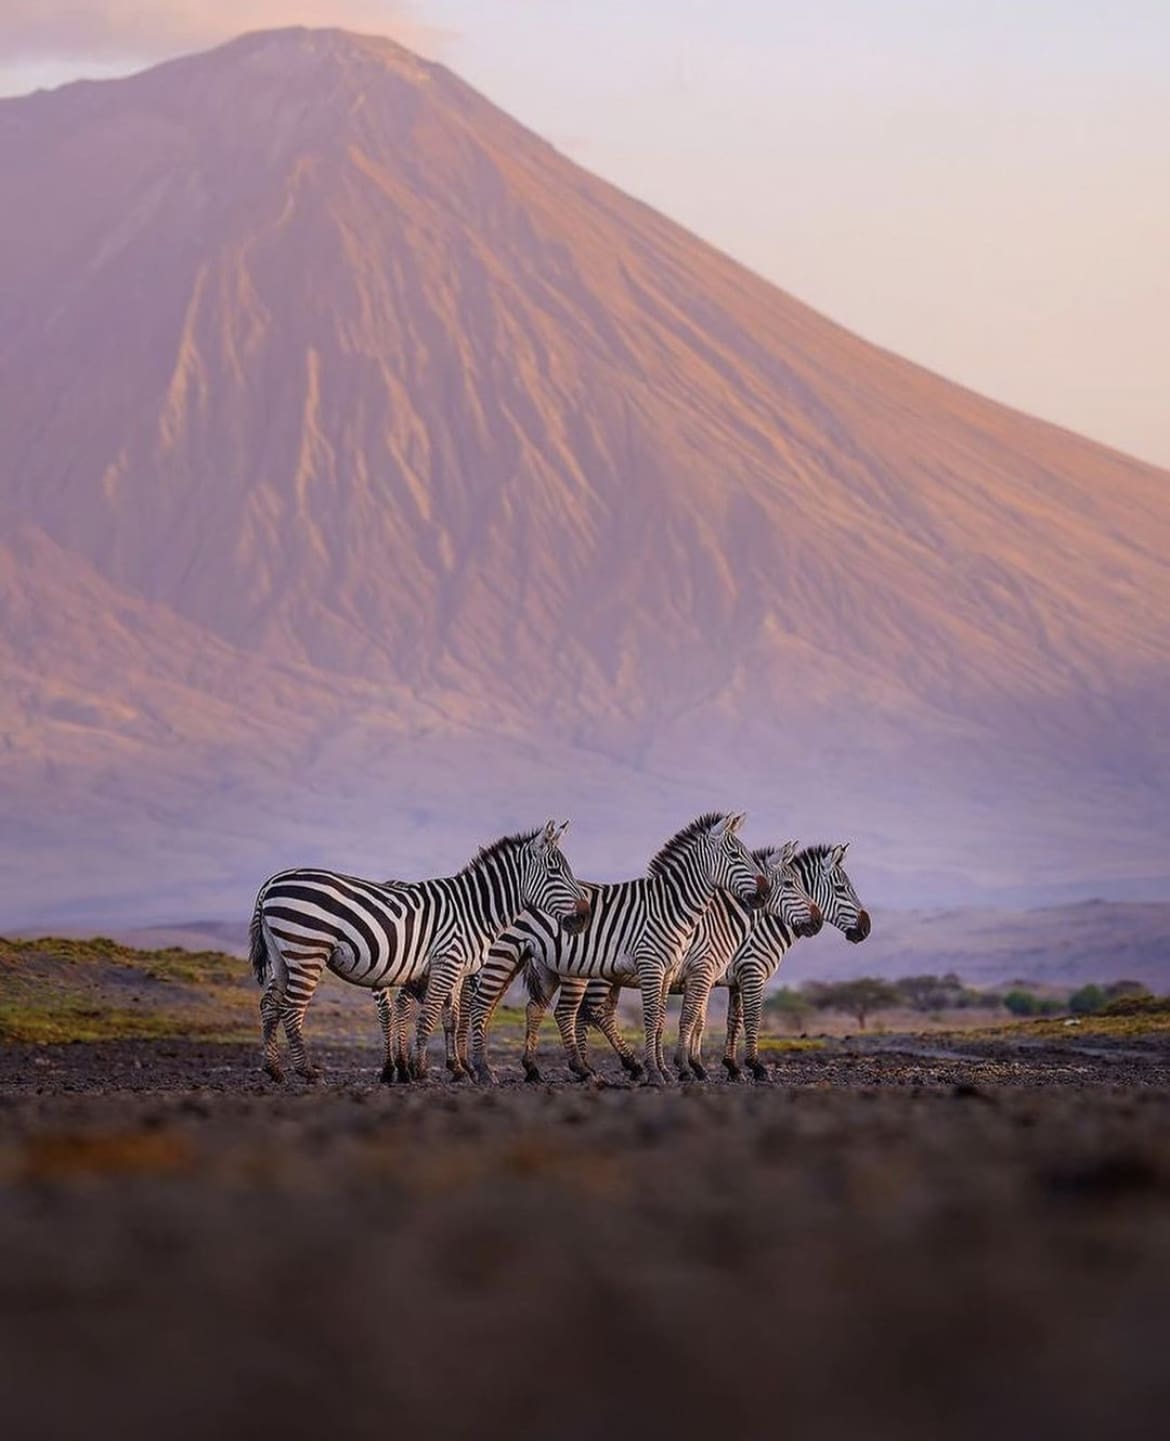 Zebras in the shadow of Mount Kilimanjaro